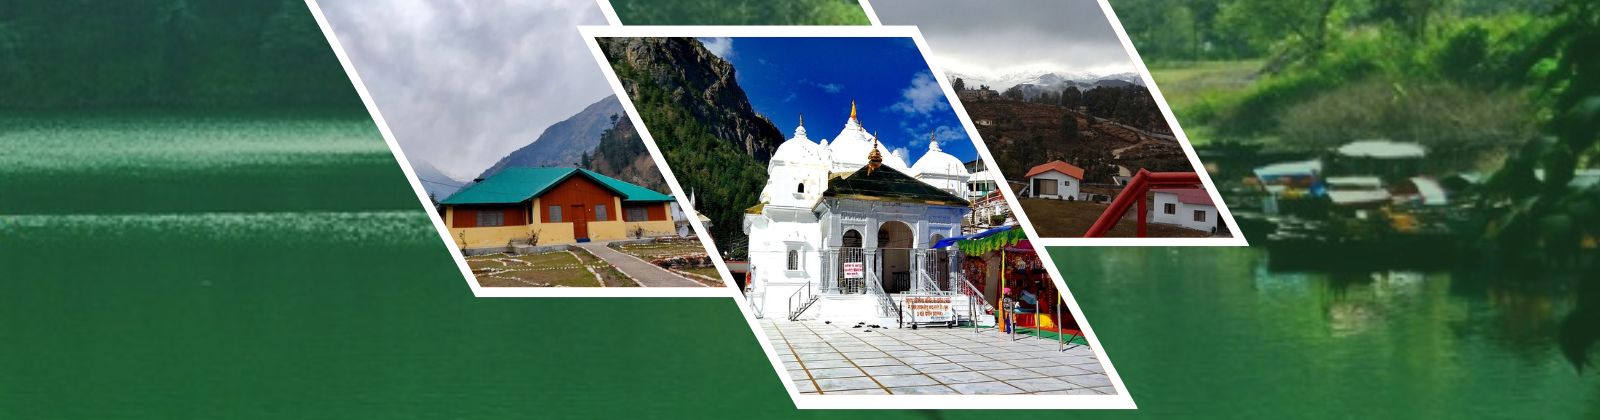 Harshil Valley Tour - An offbeat Place in Uttarakhand near Gangotri